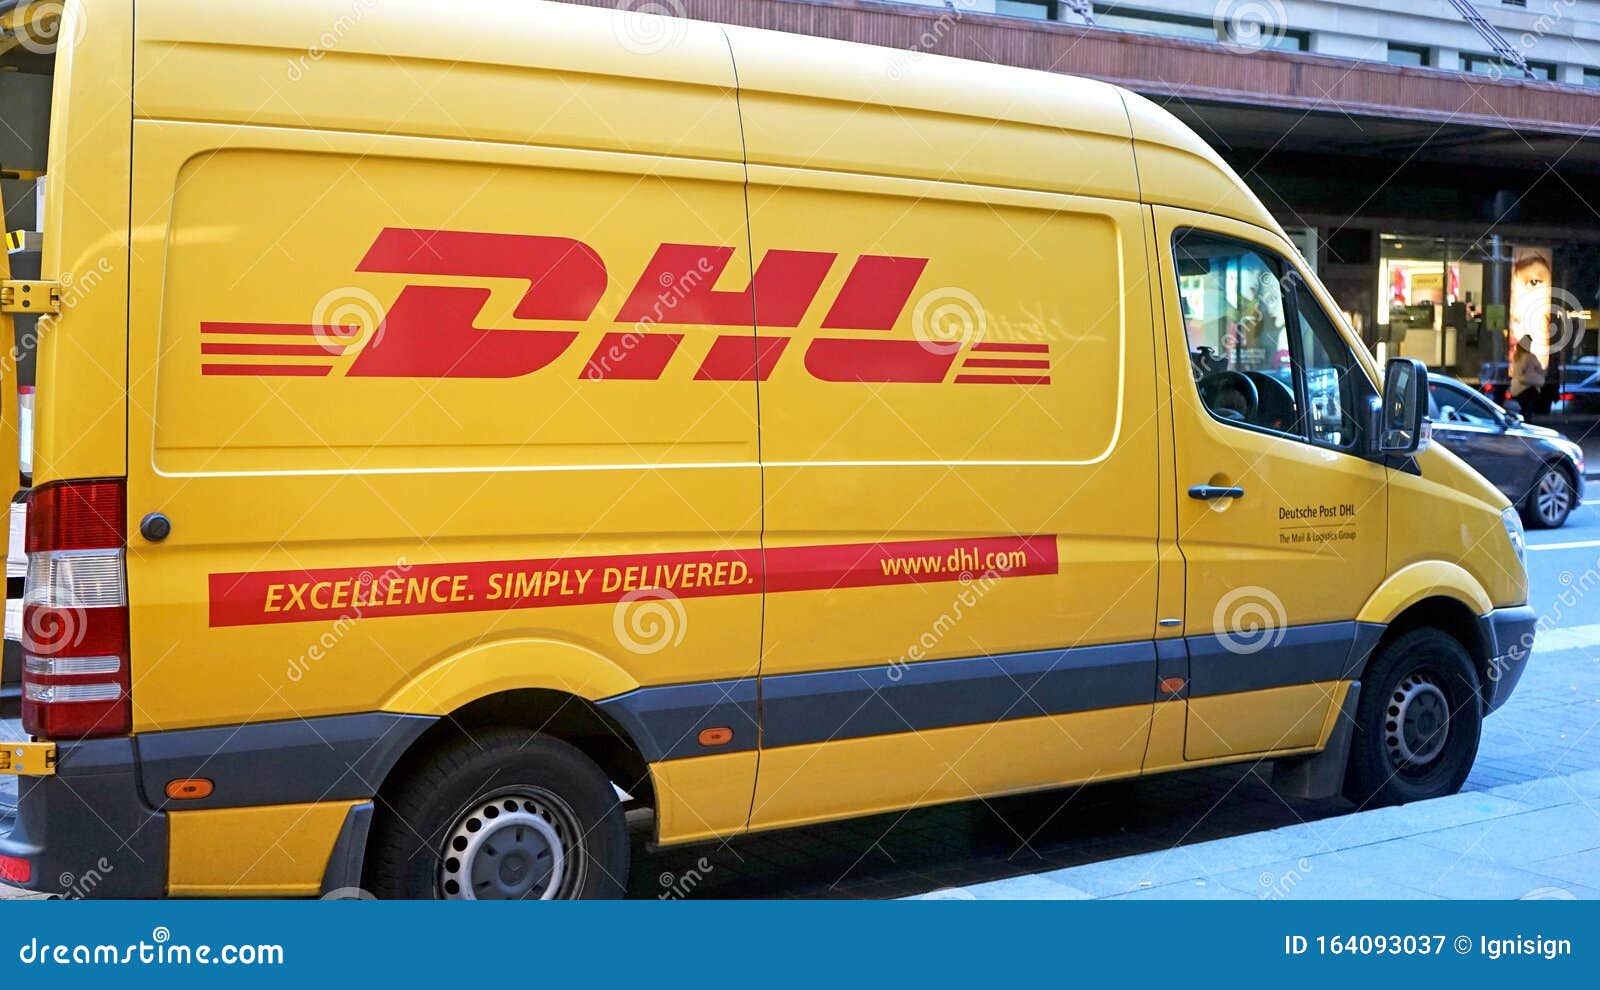 DHL Delivery Van. Dhl is Global Market Leader in Logistics Industry ...